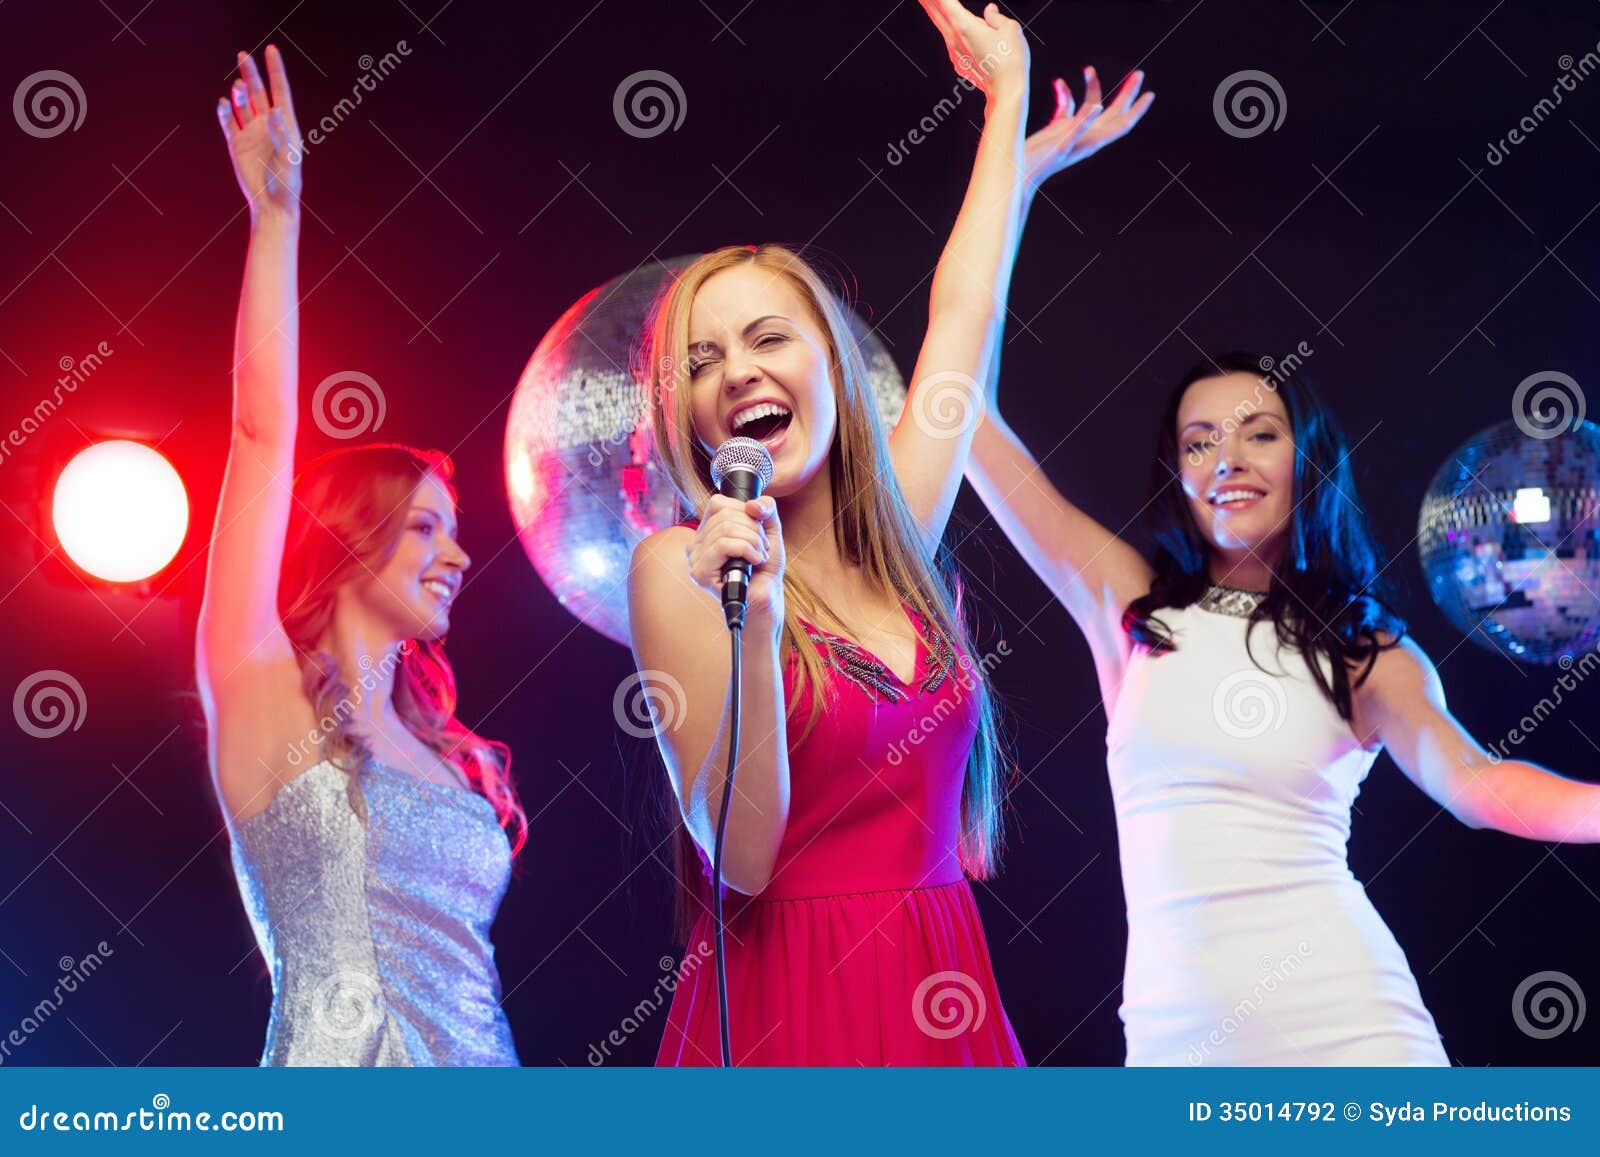 Пою 3 видео. Девушка поет. Три девочки поют на сцене. Девушка поет на сцене. Девушка поет и танцует.